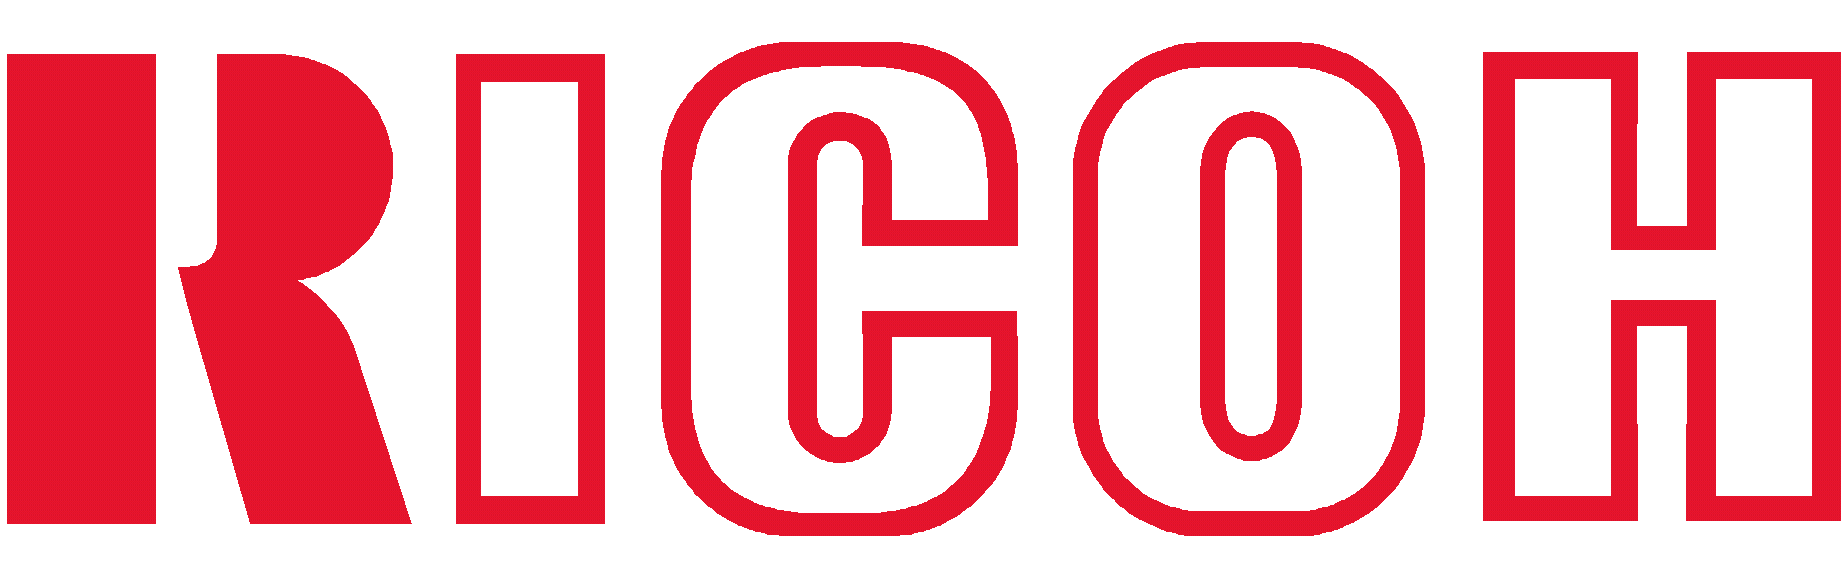 Ricoh Logo - Image - Ricoh logo.gif | Logopedia | FANDOM powered by Wikia